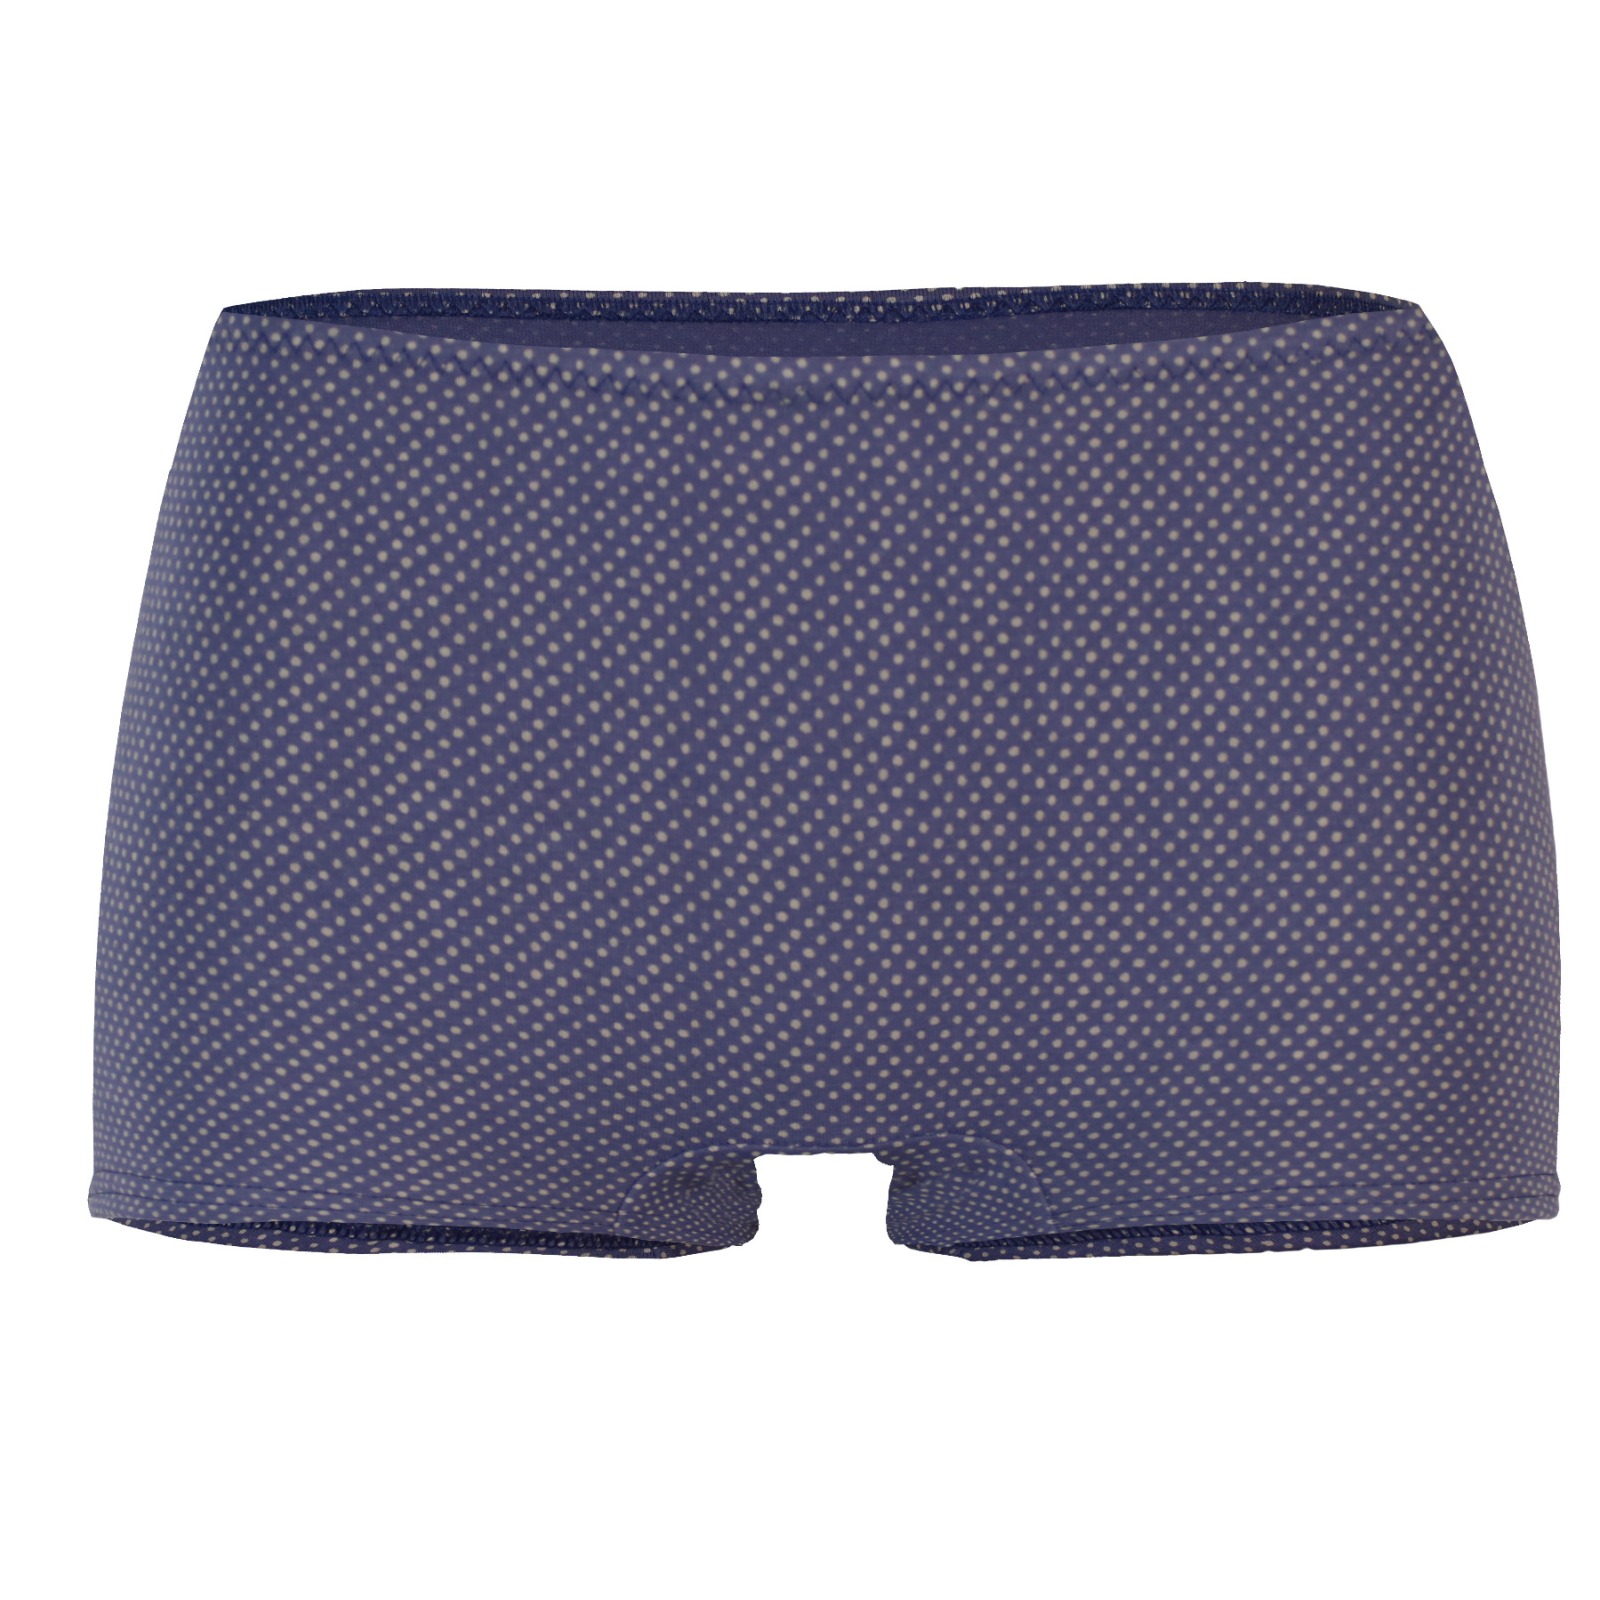 organic panties Erna pattern grey dots on blue